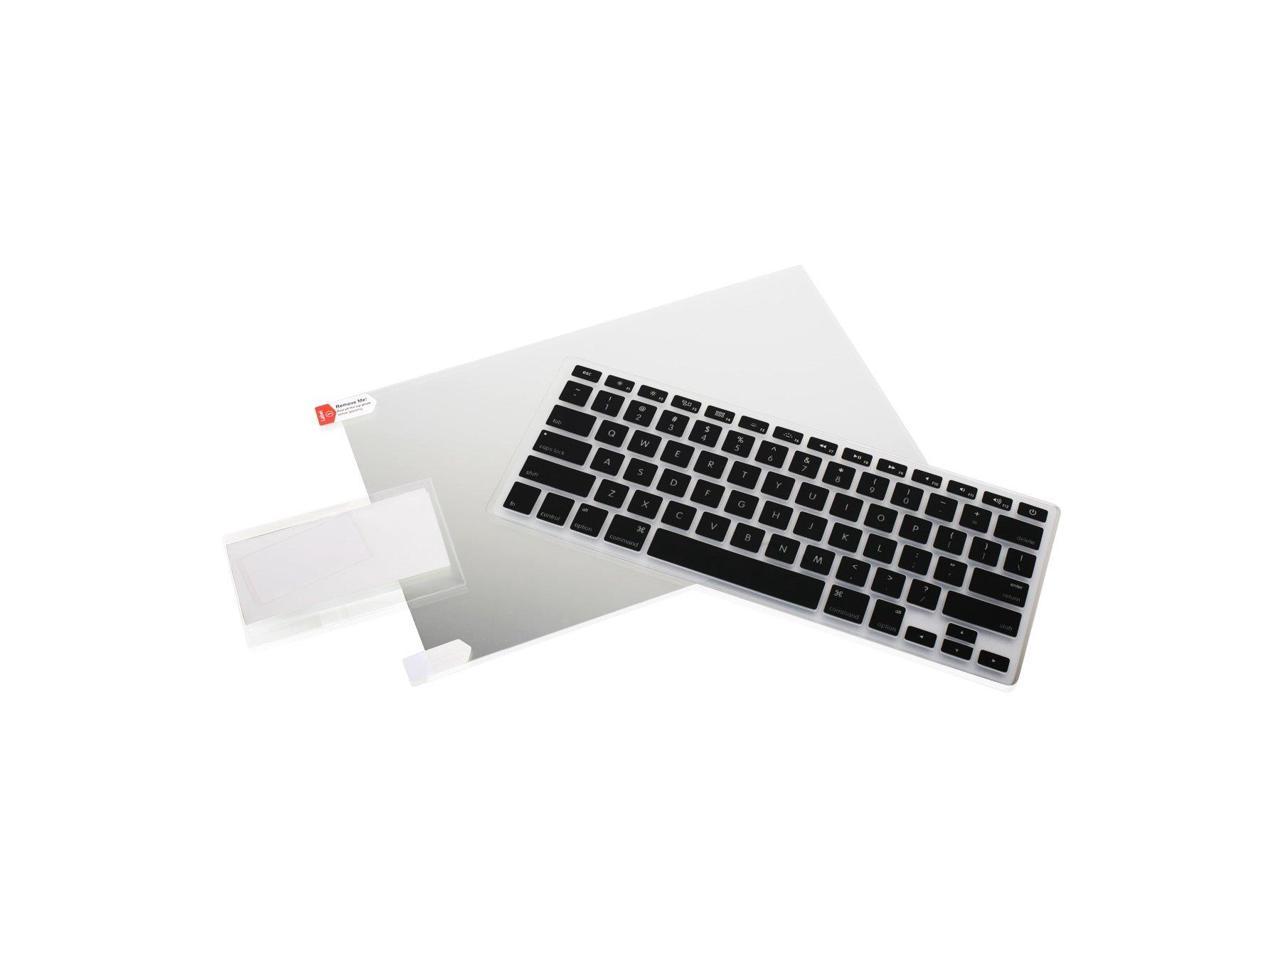 IOGEAR Shield+Protect: 13" Macbook Air Keyboard Skin and Screen Protector - For Notebook Keyboard -